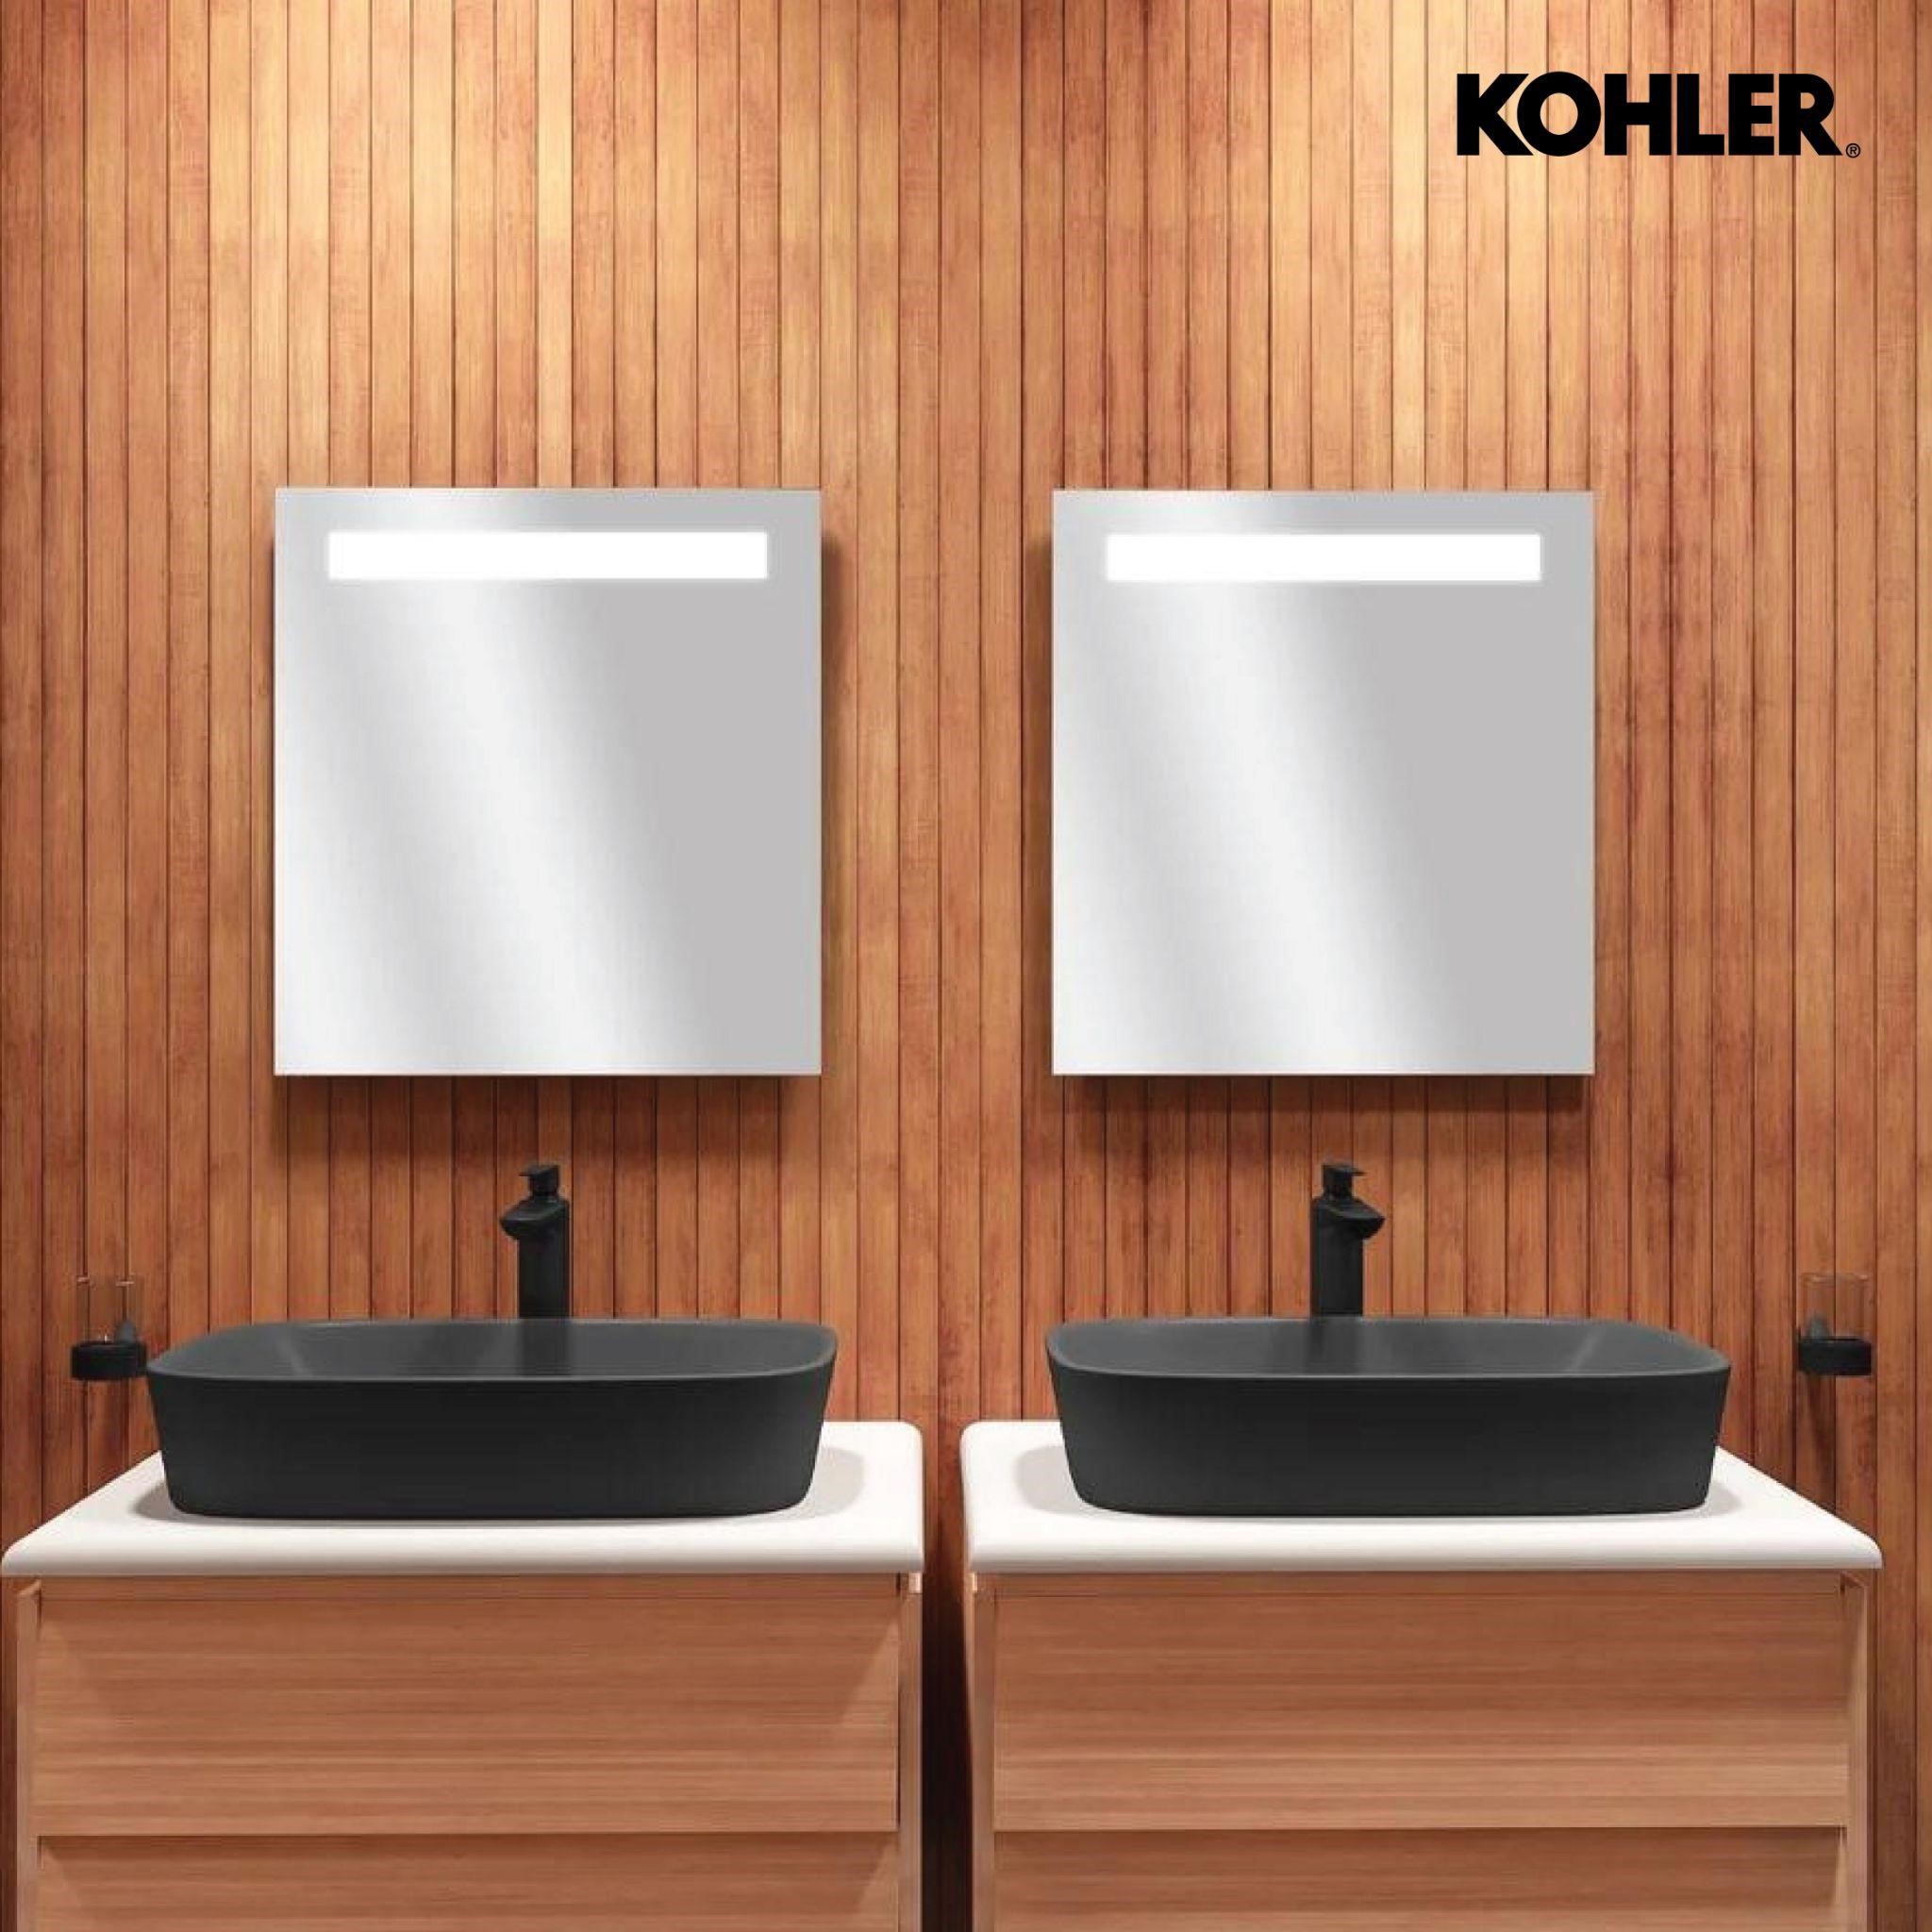 Kohler wash basin